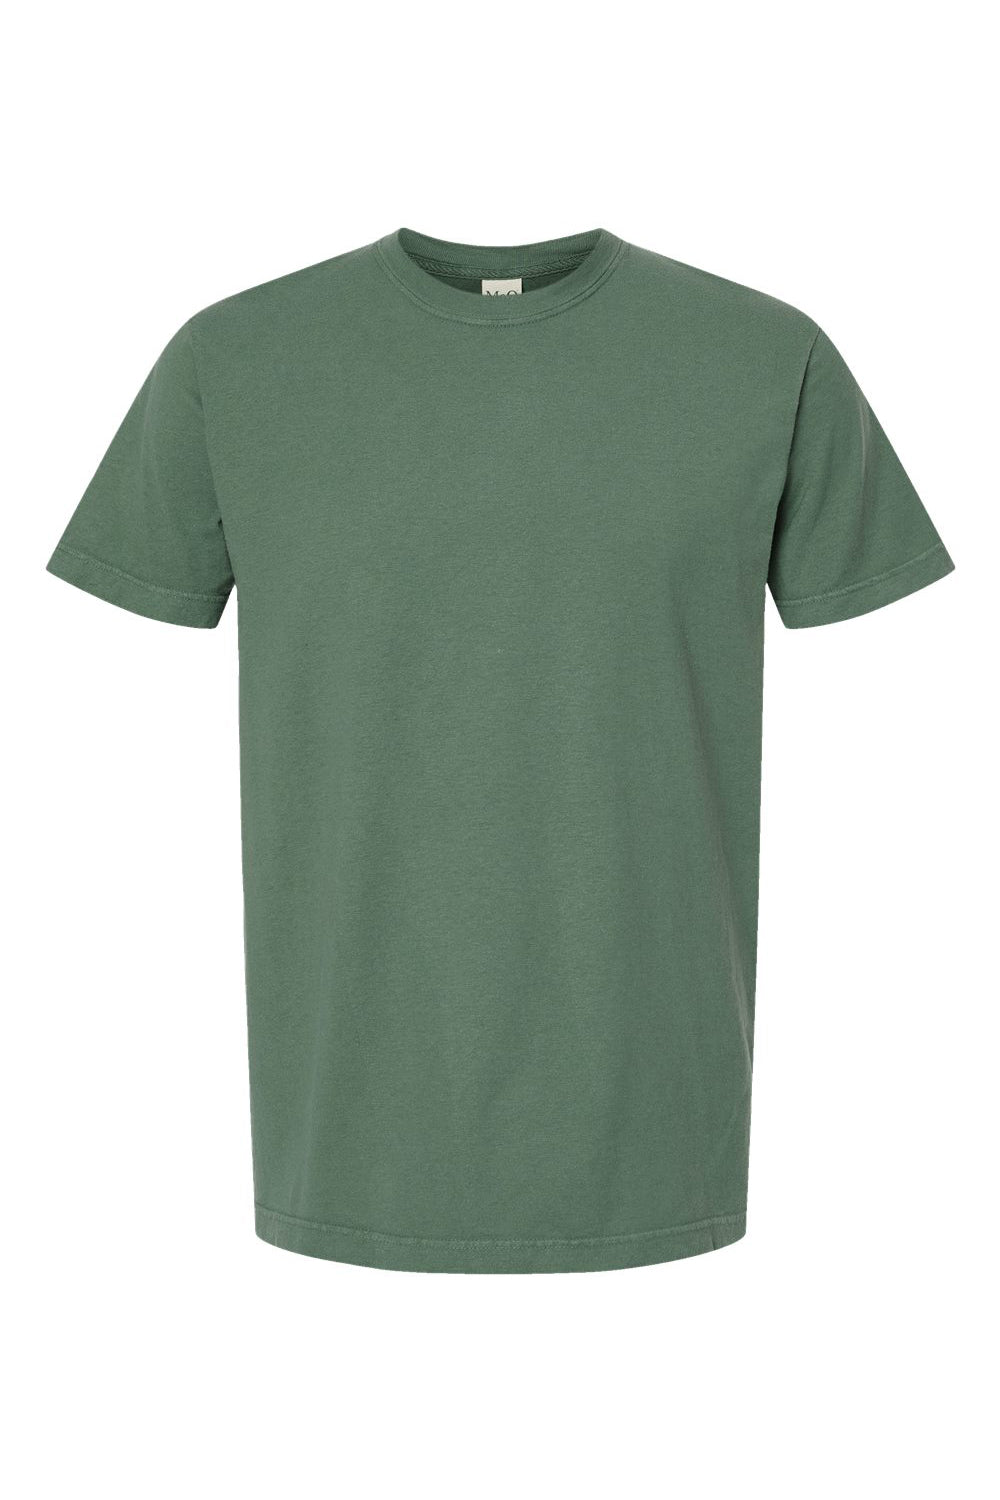 M&O 6500M Mens Vintage Garment Dyed Short Sleeve Crewneck T-Shirt Light Green Flat Front